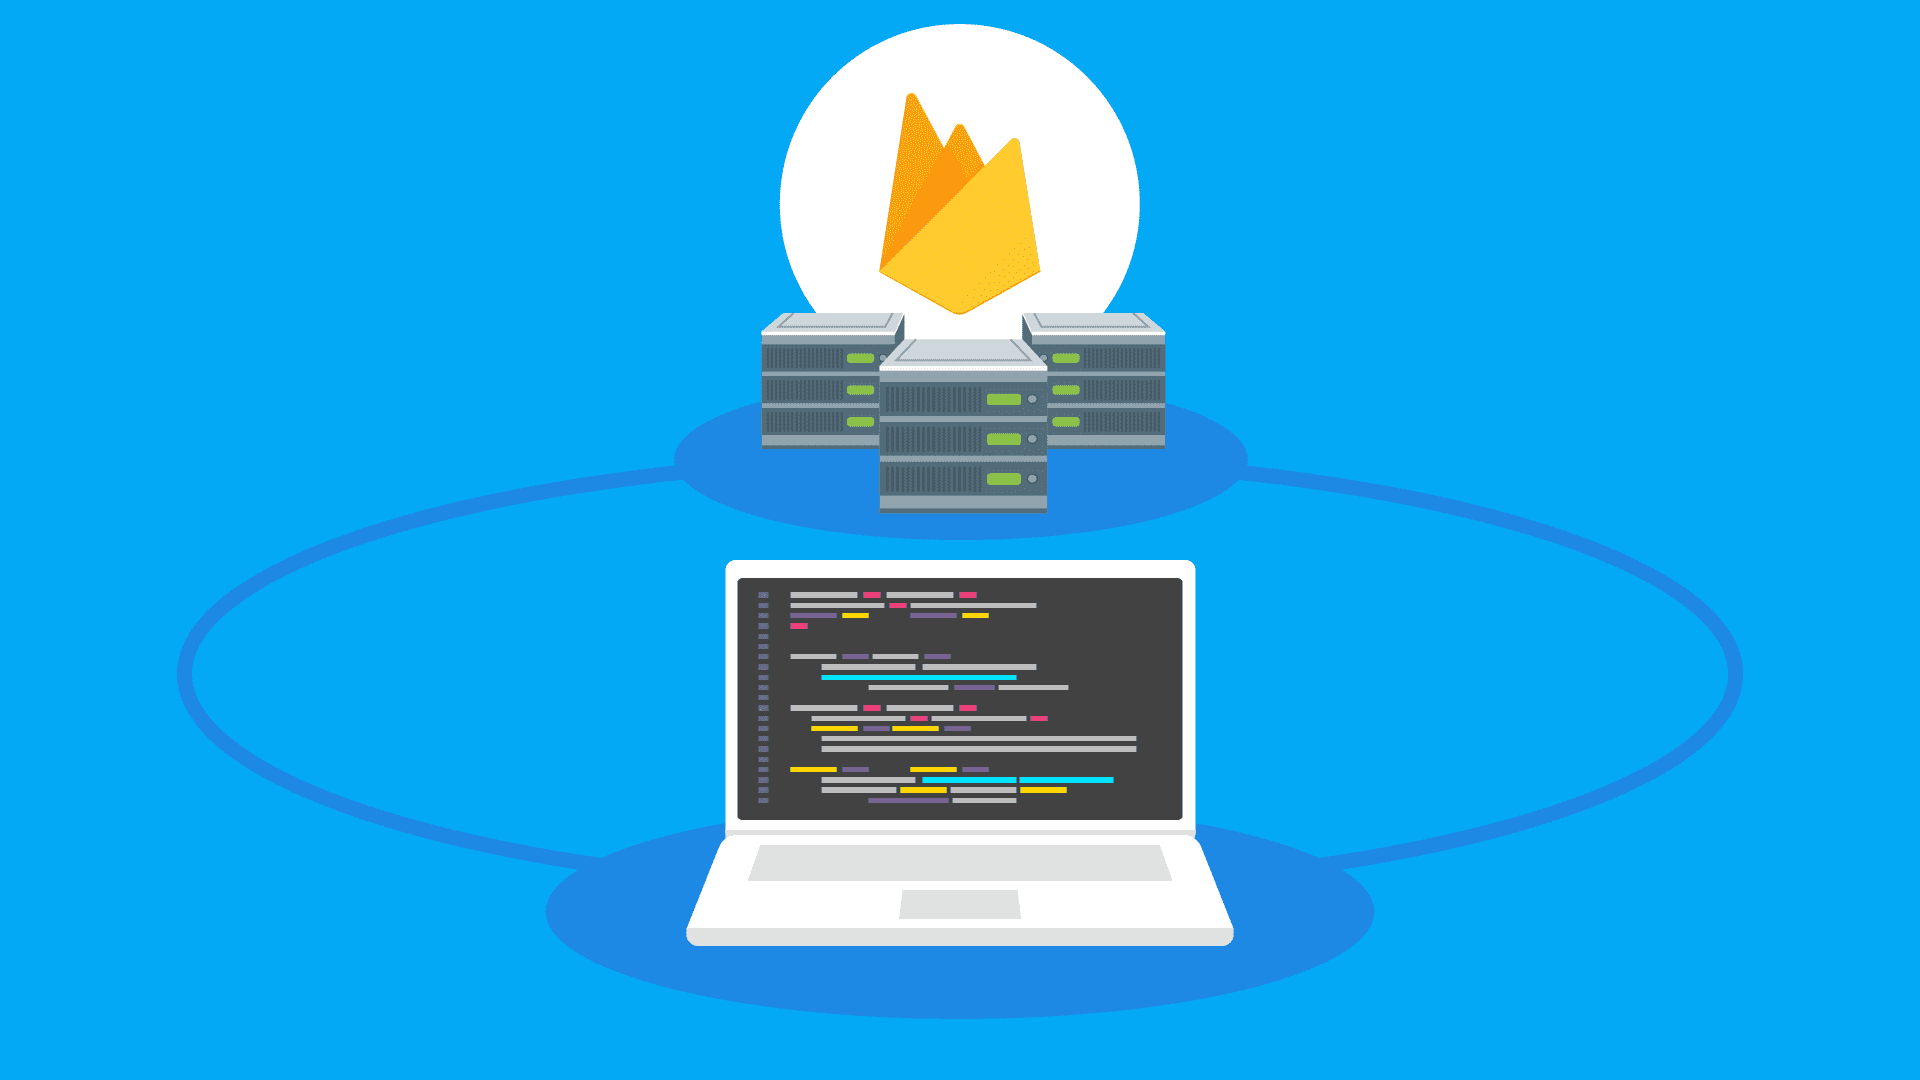 Firebase Cloud Functions